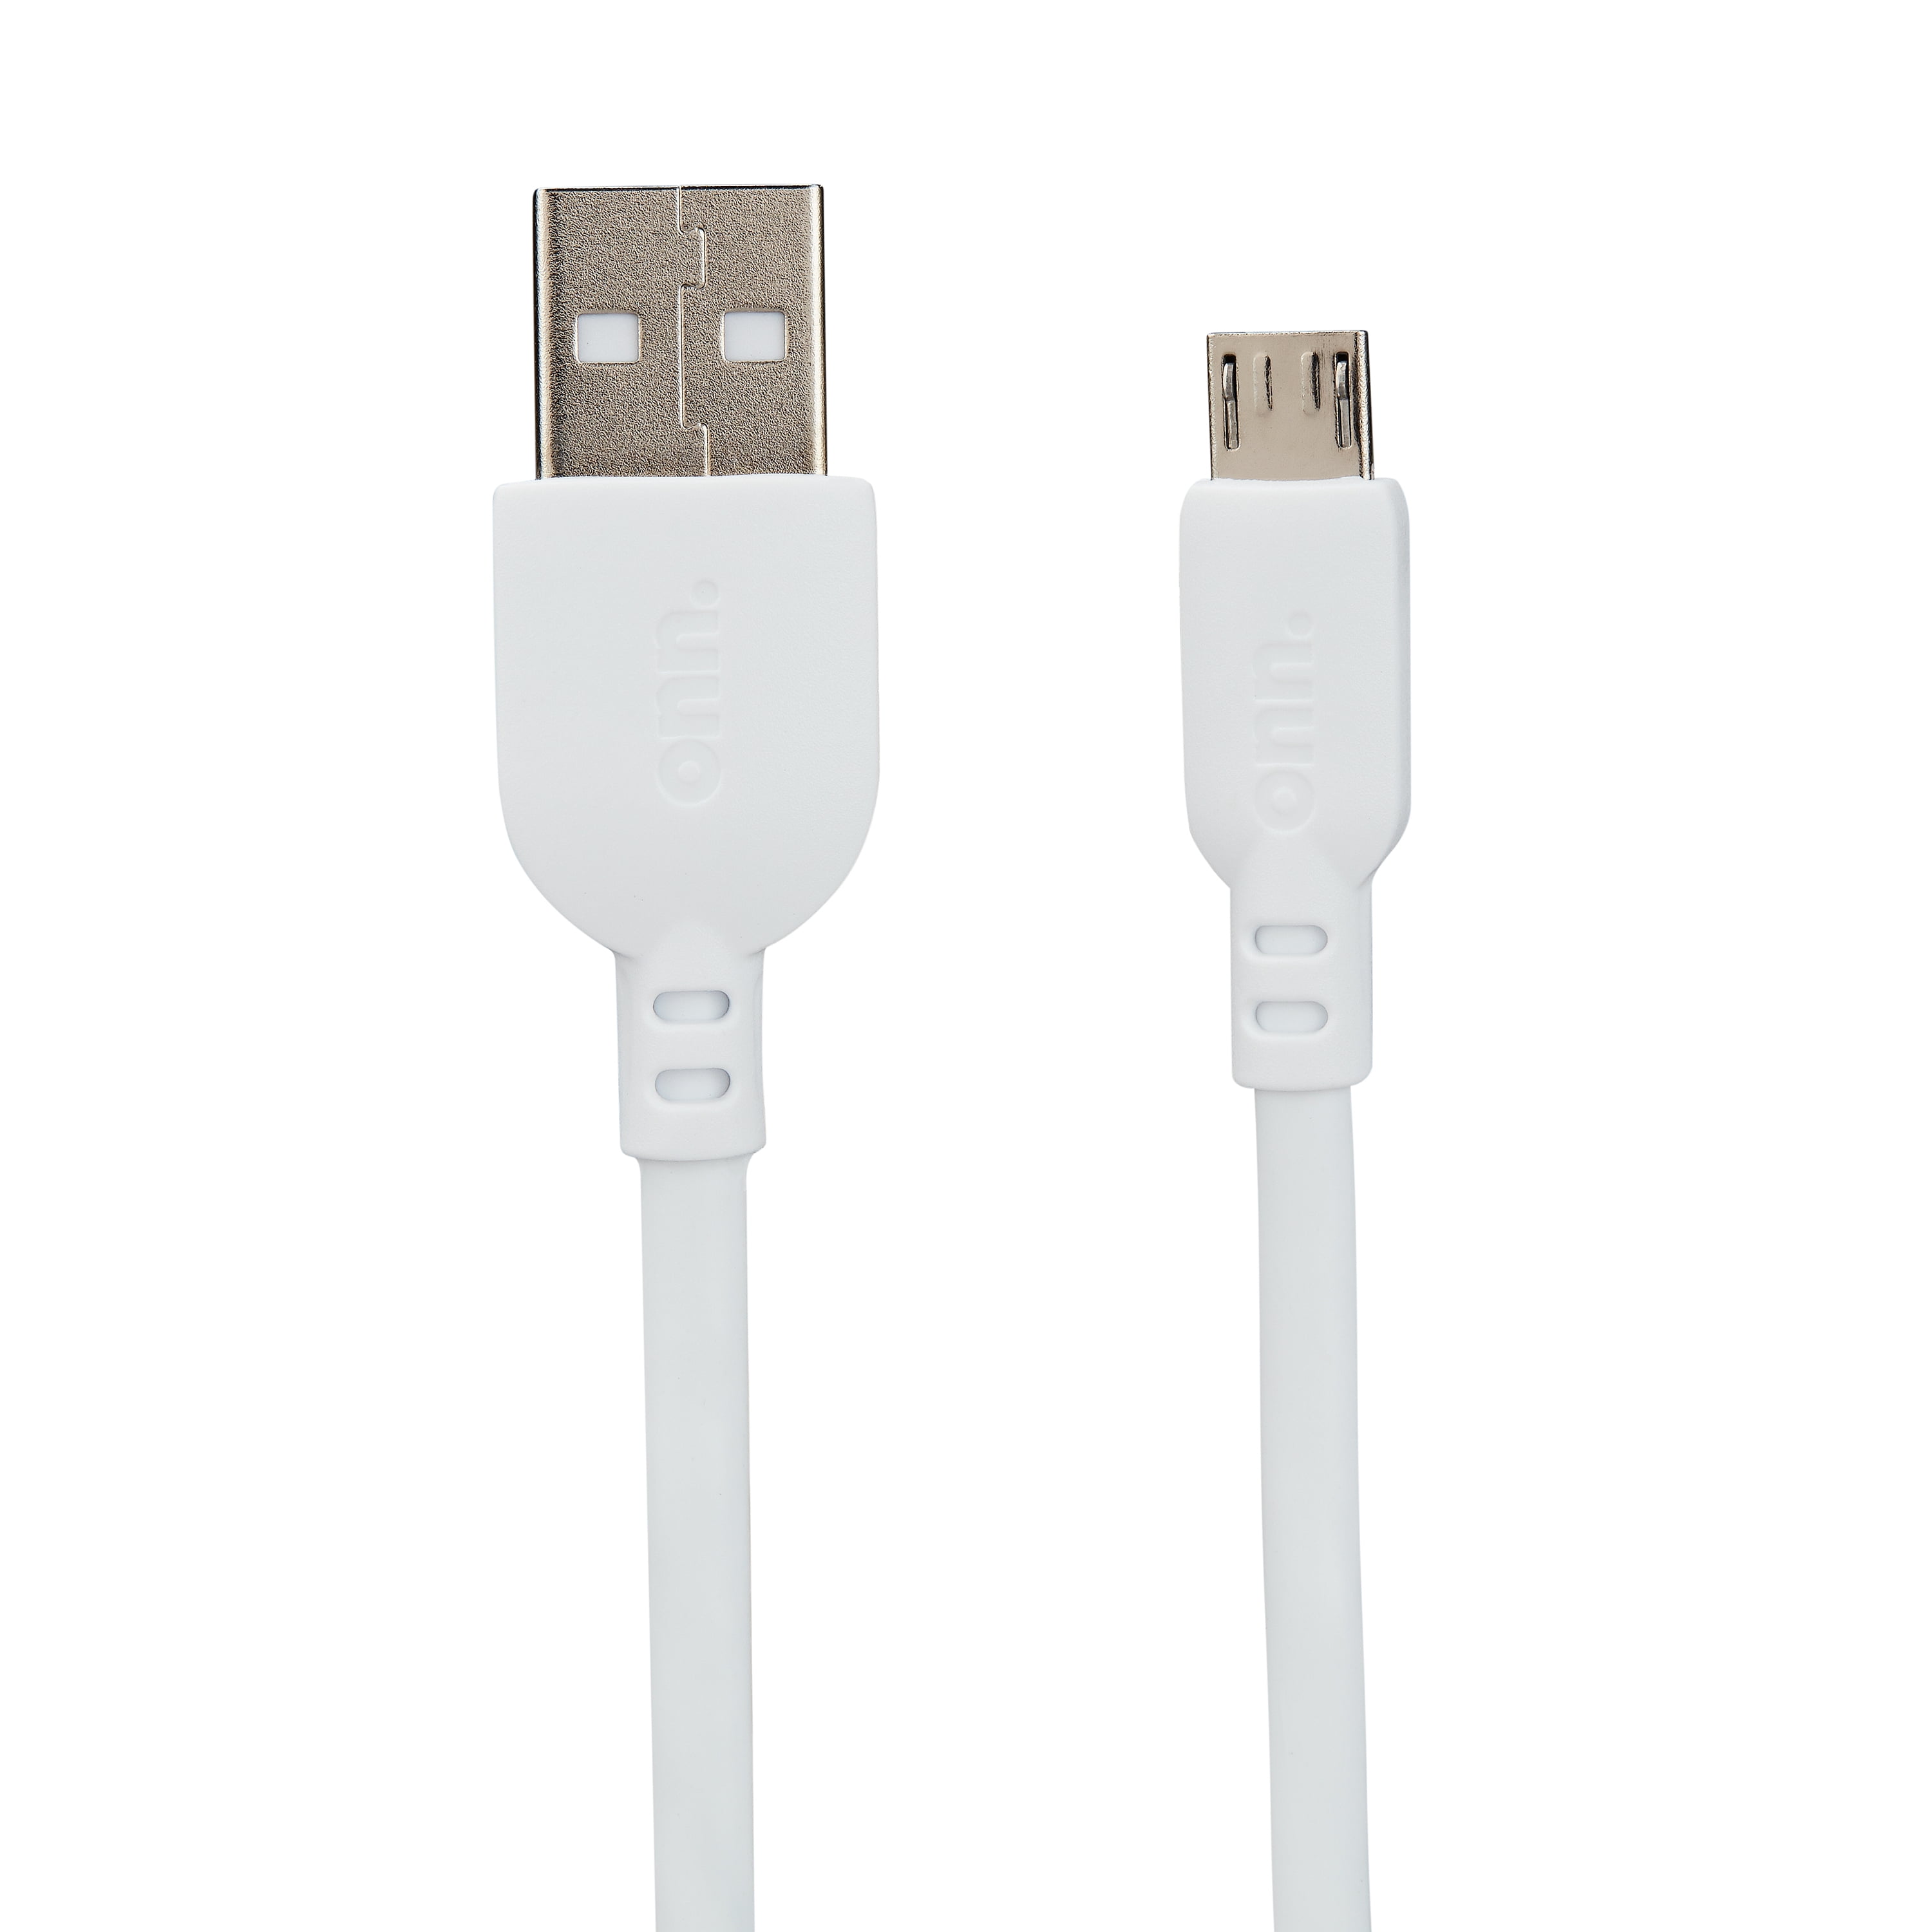 udluftning beruset slå op onn. Micro-USB to USB Cable, 10 ft, White - Walmart.com